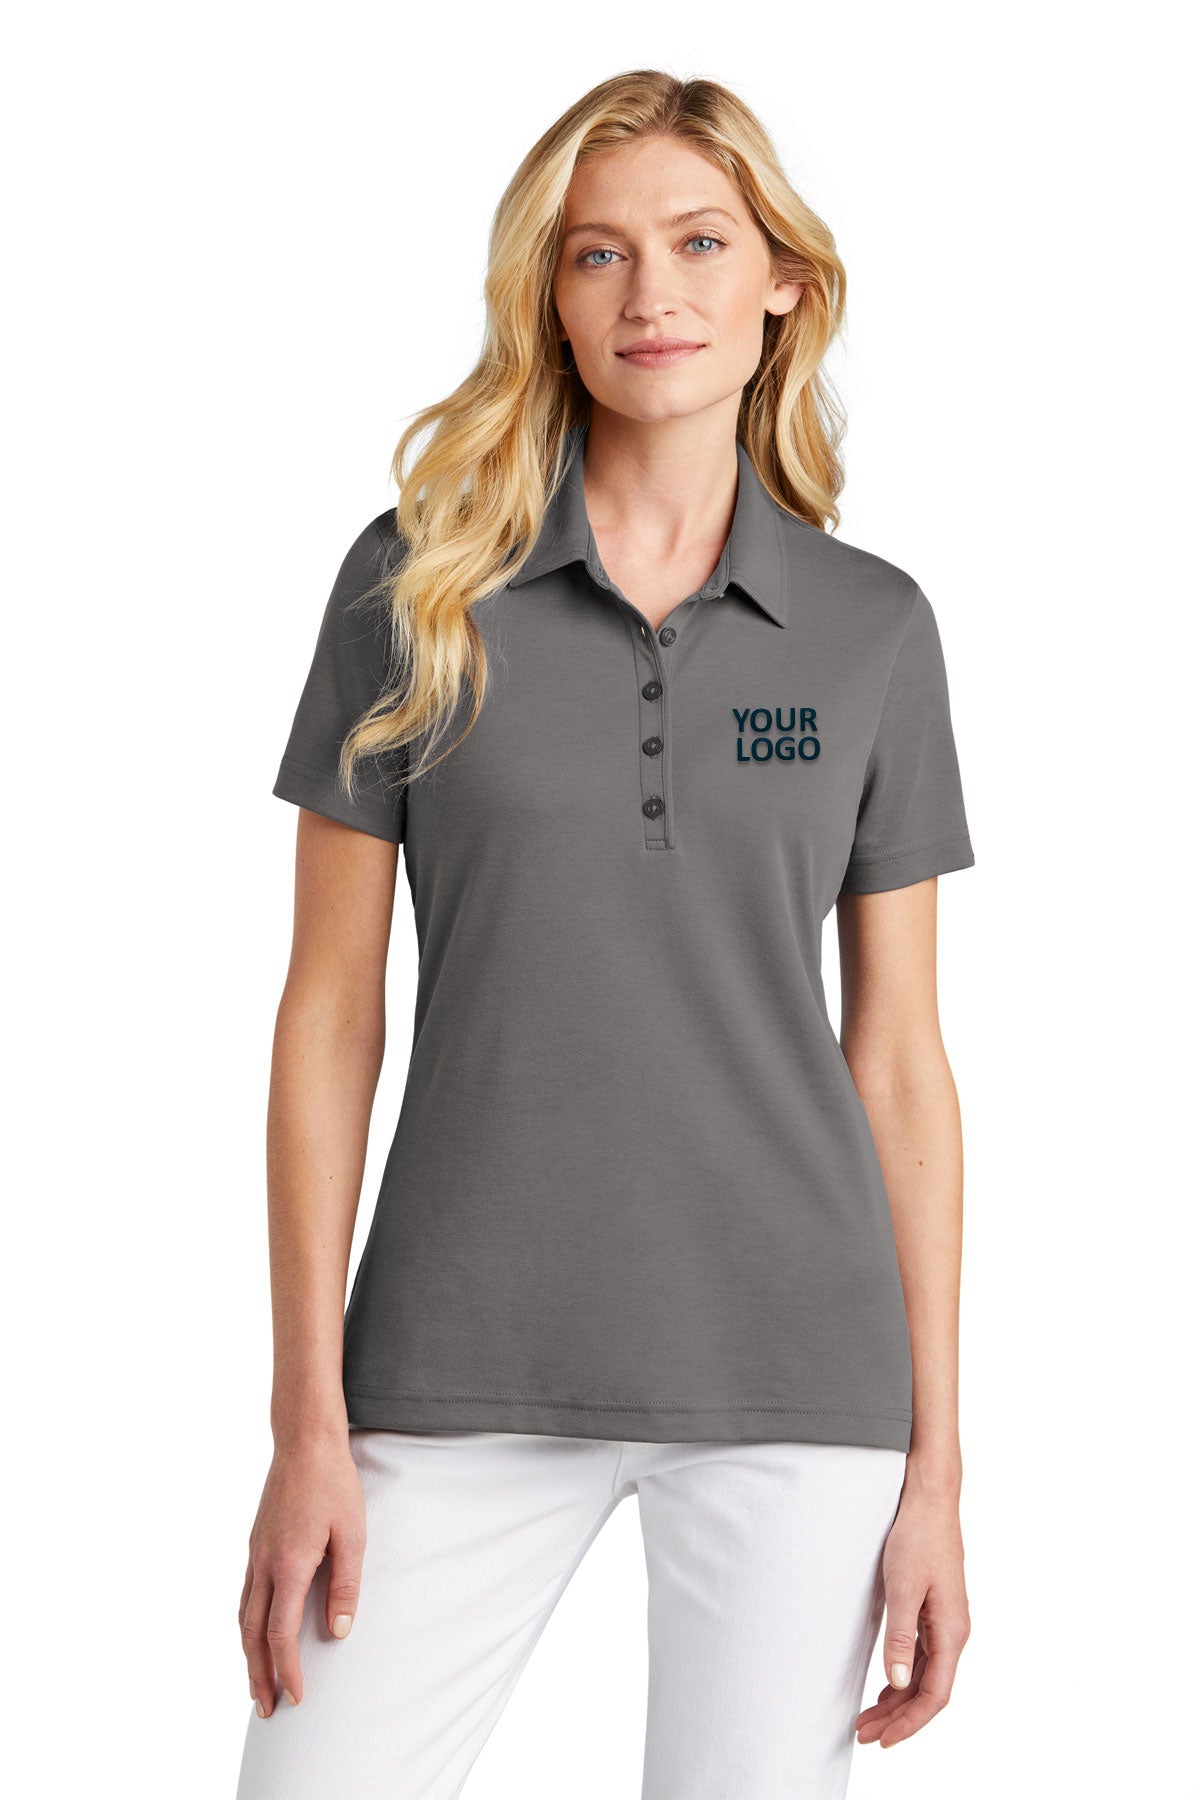 TravisMathew Quiet Shade Grey Polos polo shirts with logo embroidery